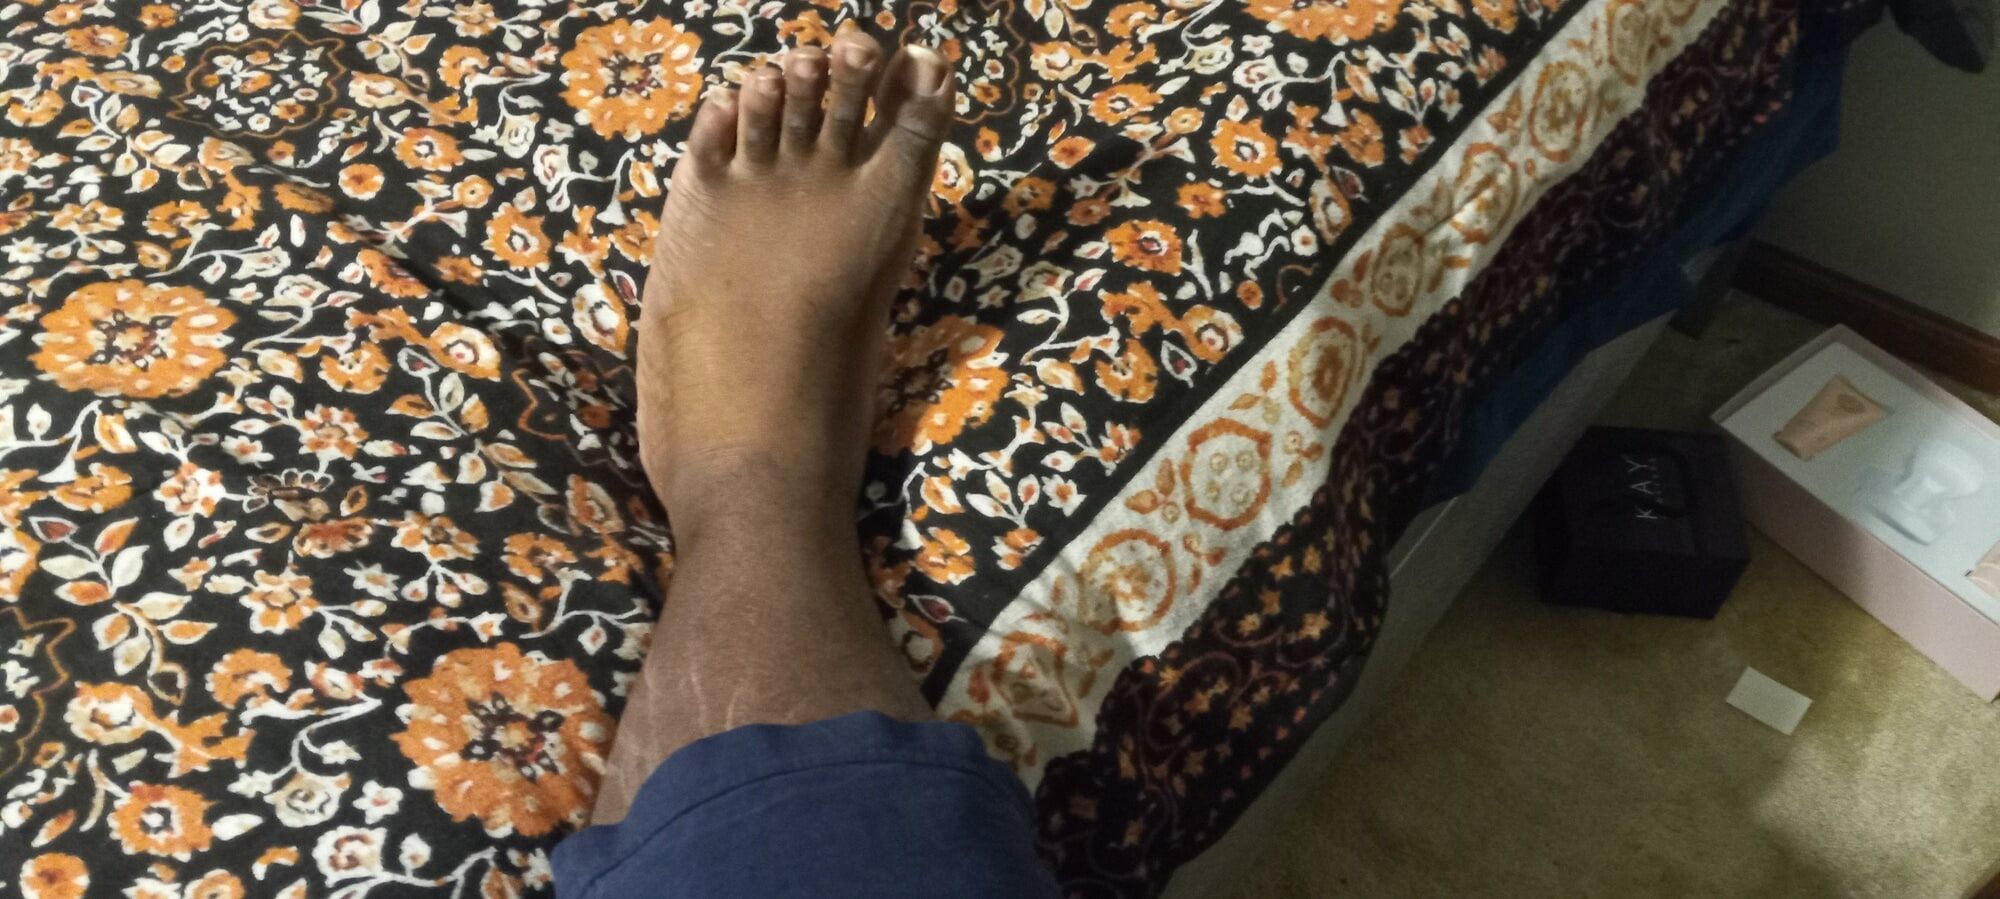 Pics of my Feet #6